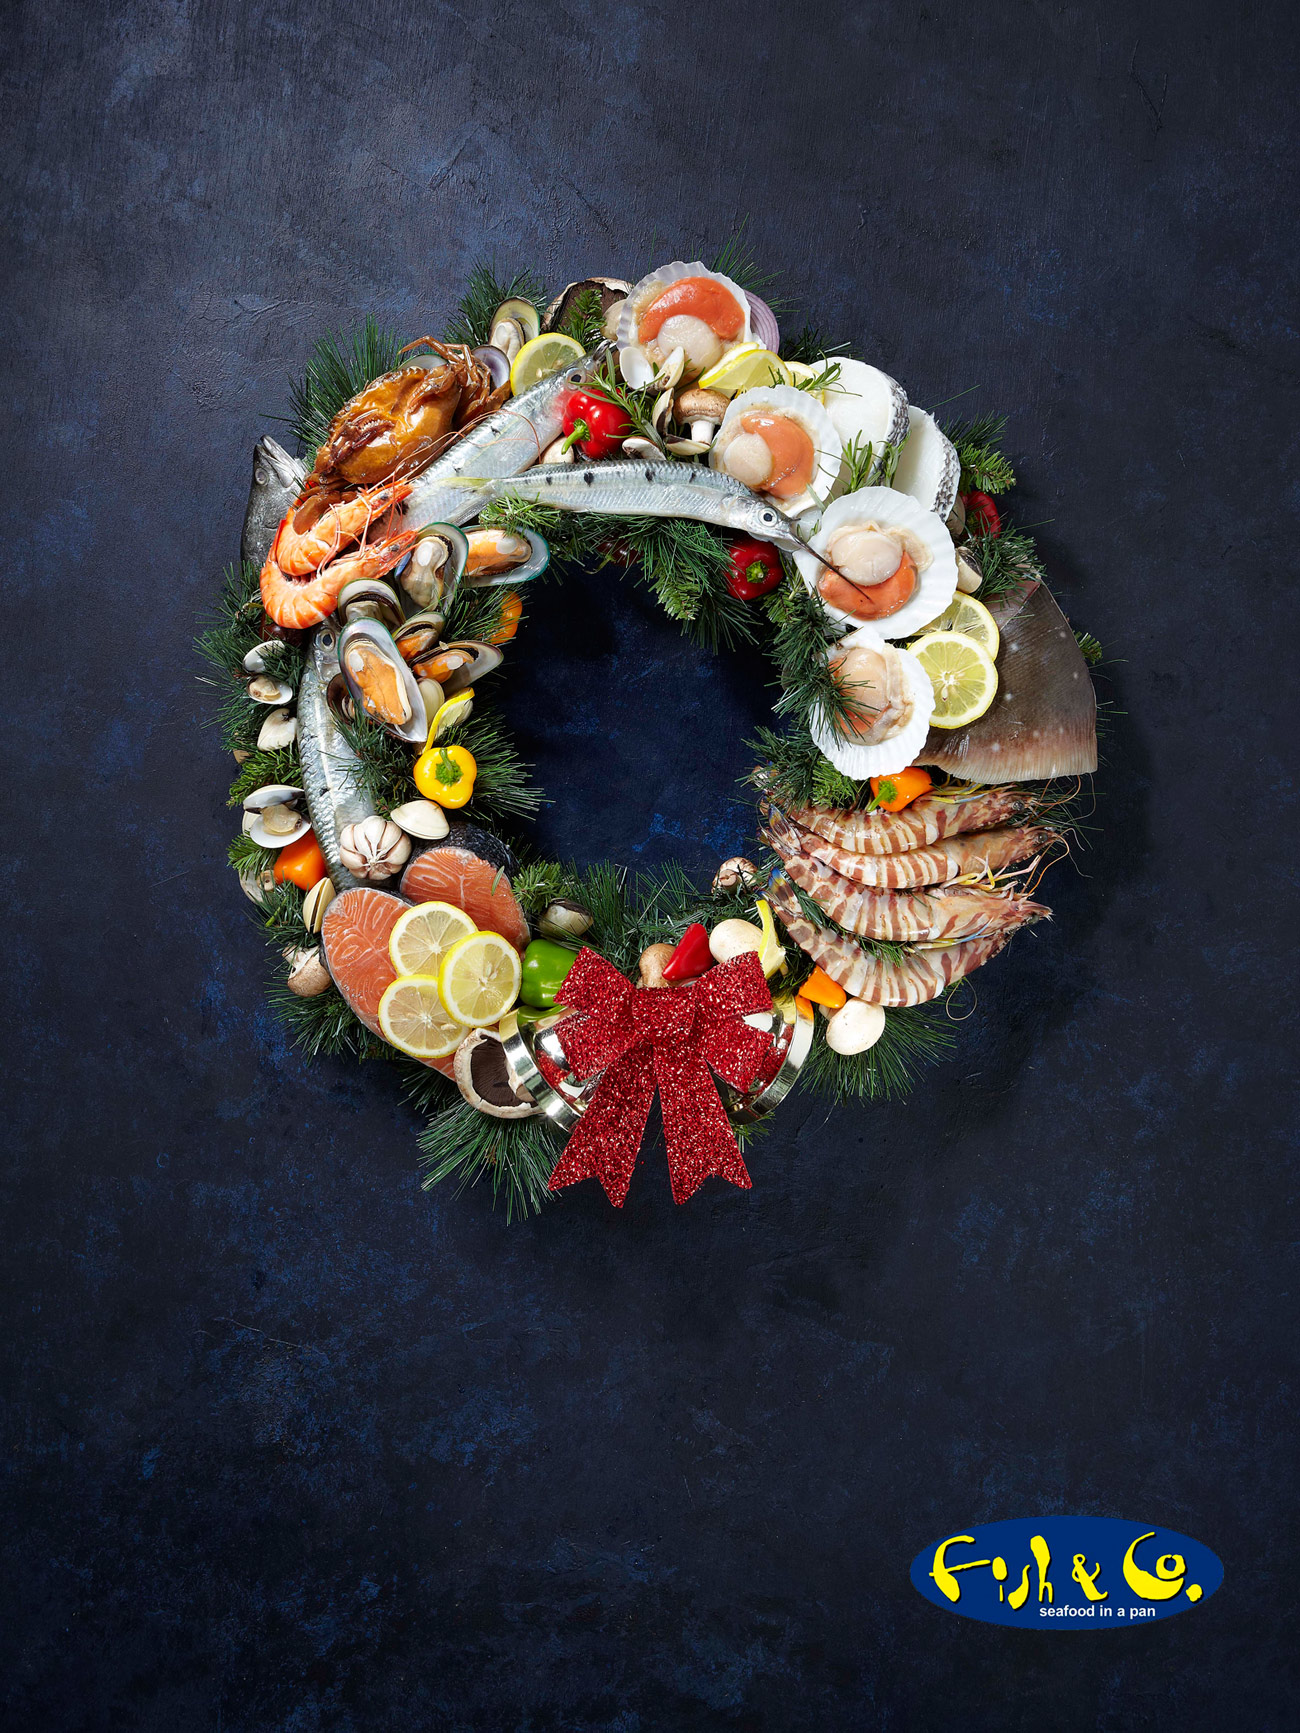 20151002-Fish&CO-Christmas-14845-with-logo.jpg